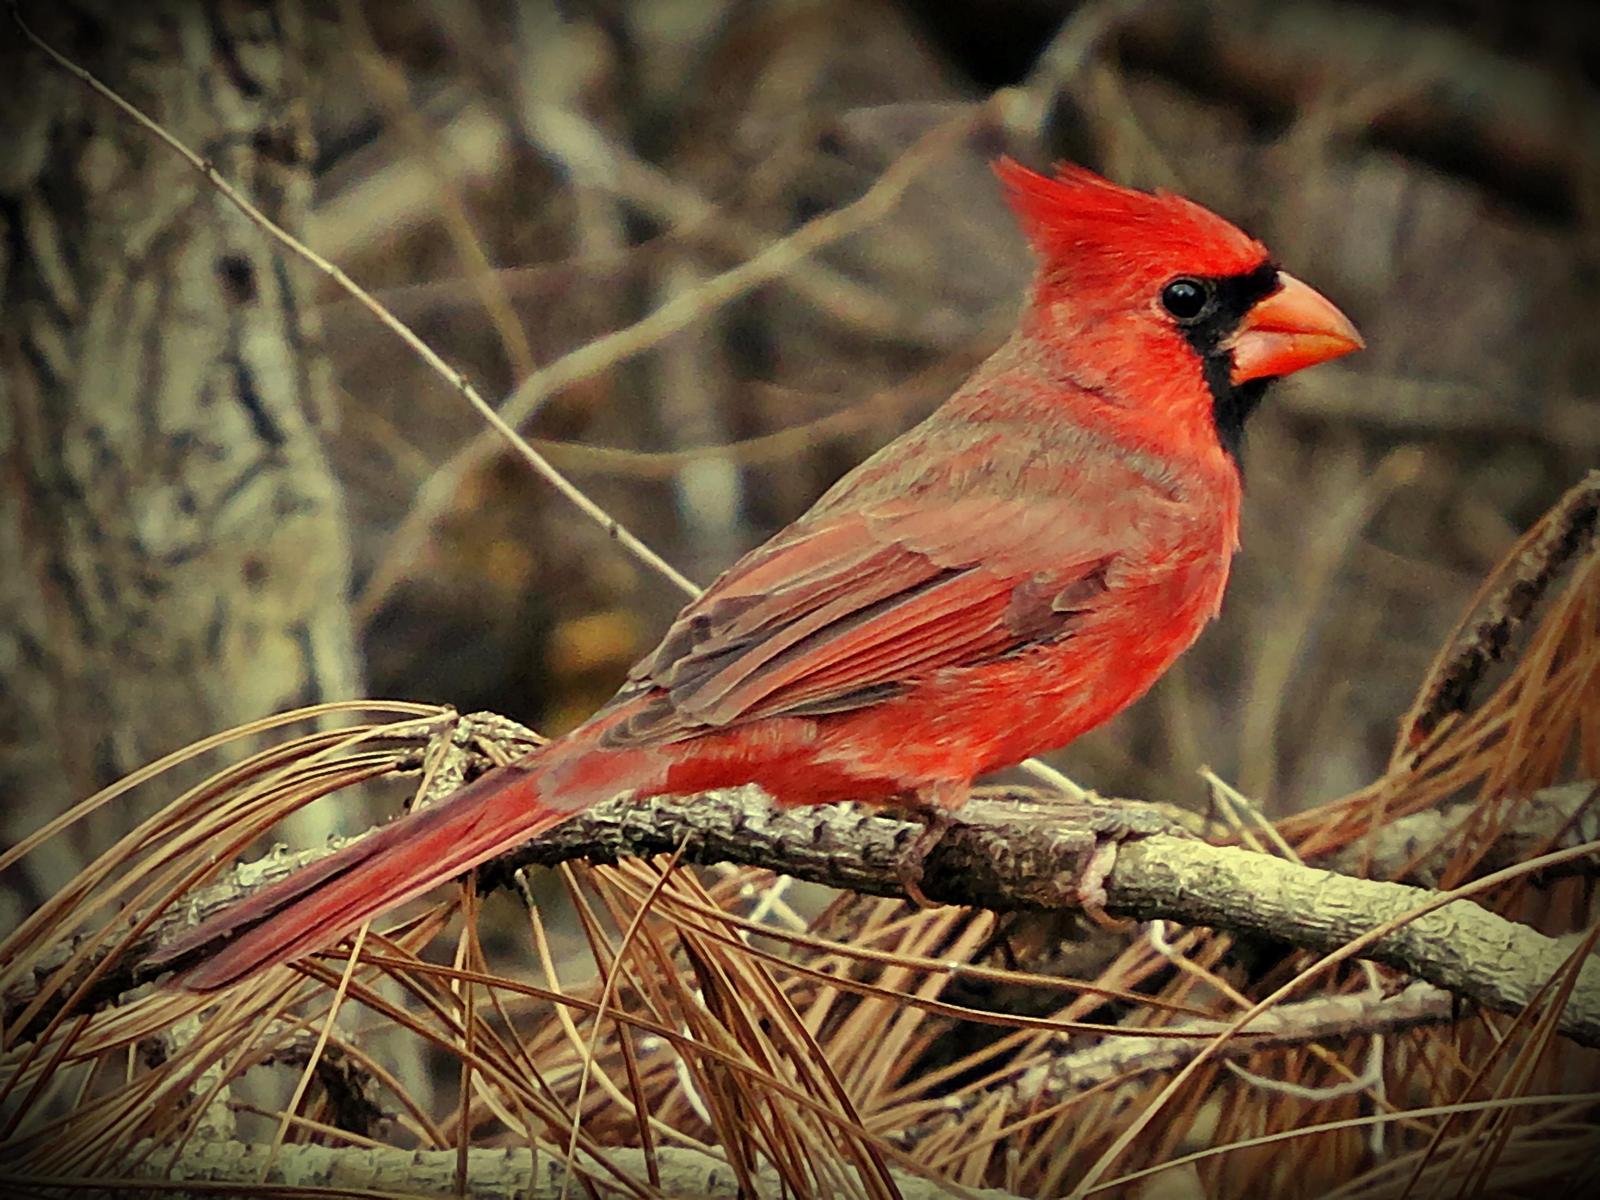 Northern Cardinal Photo by Bob Neugebauer